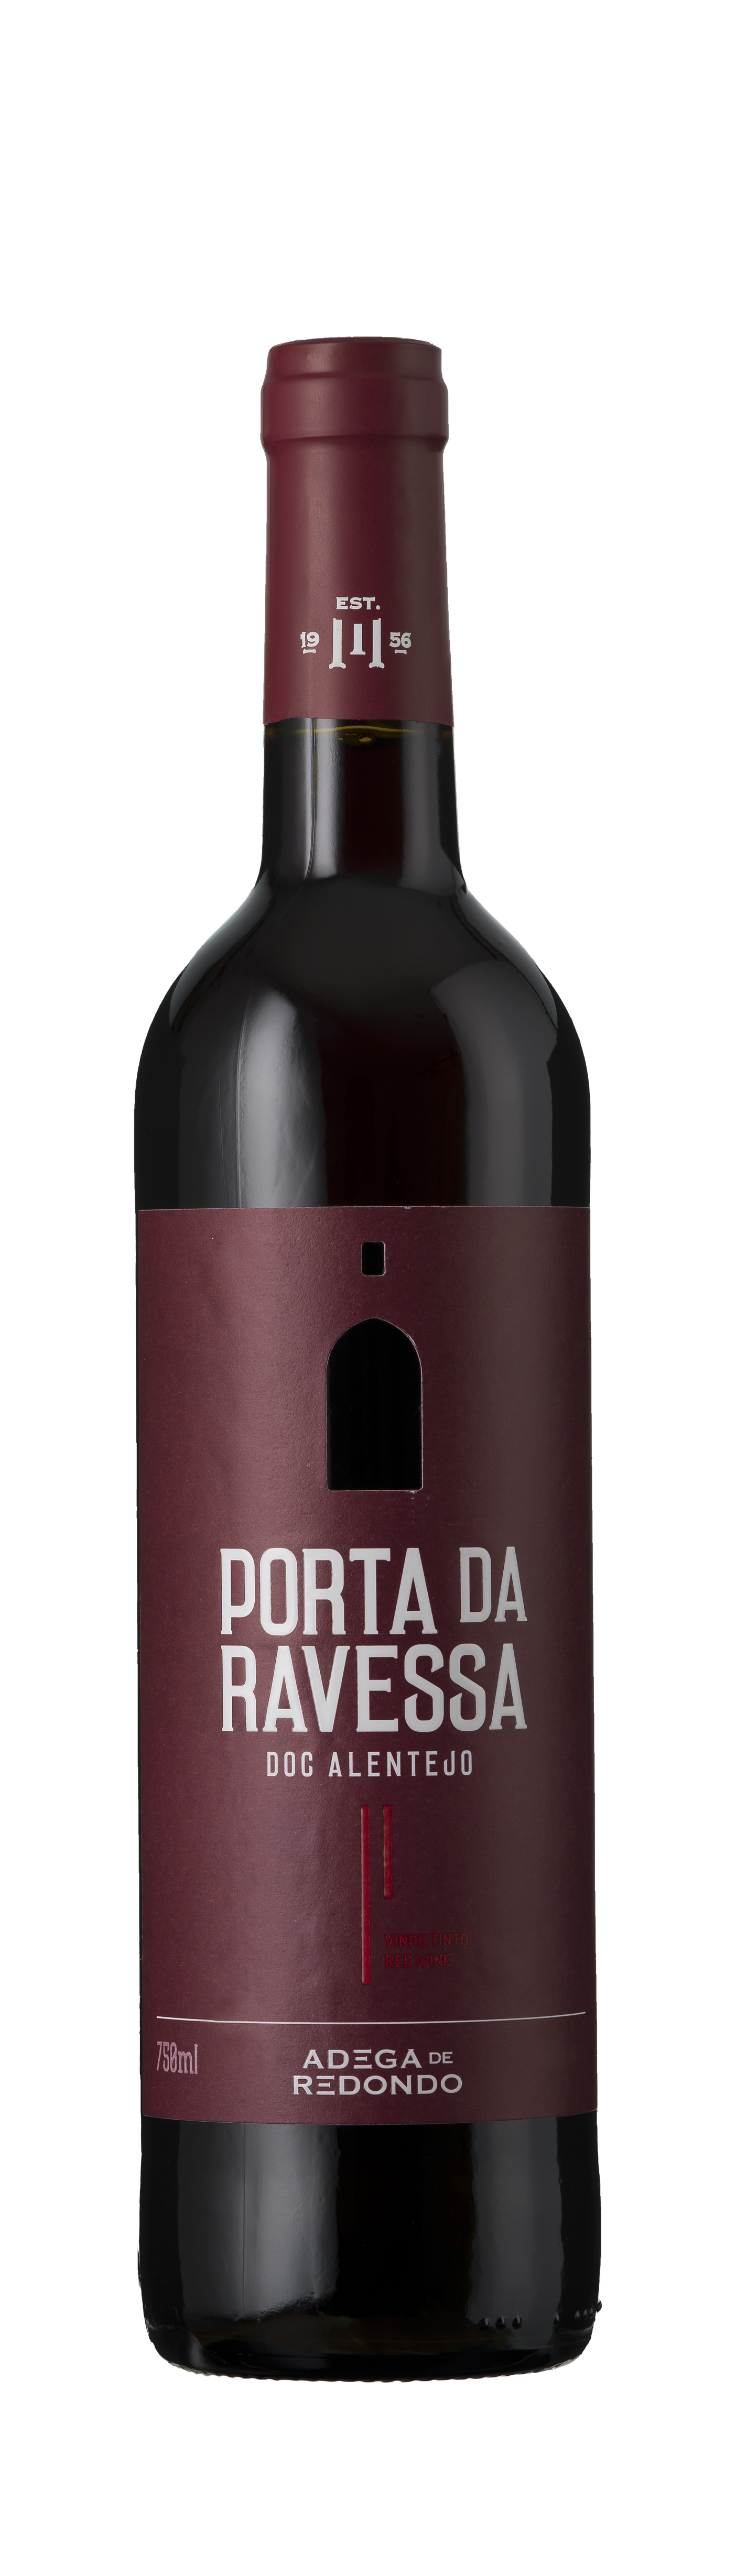 Bottle shot - Adega de Redondo, Porta da Ravessa Tinto, DOC Alentejo, Portugal